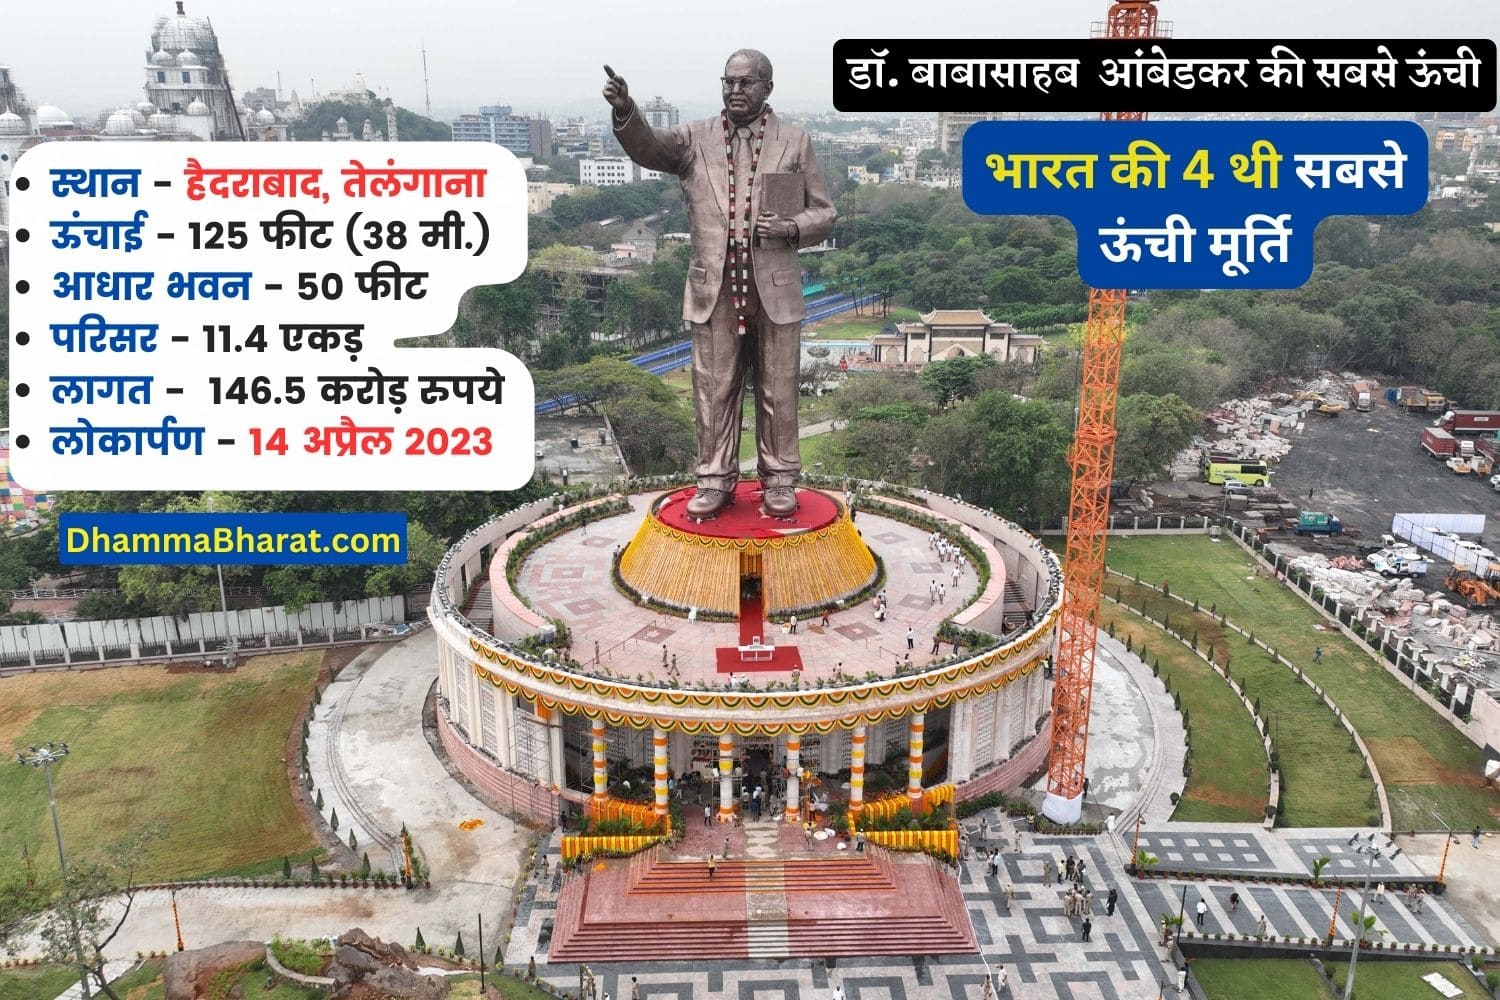 125 feet Dr Ambedkar statue in Hyderabad Telangana